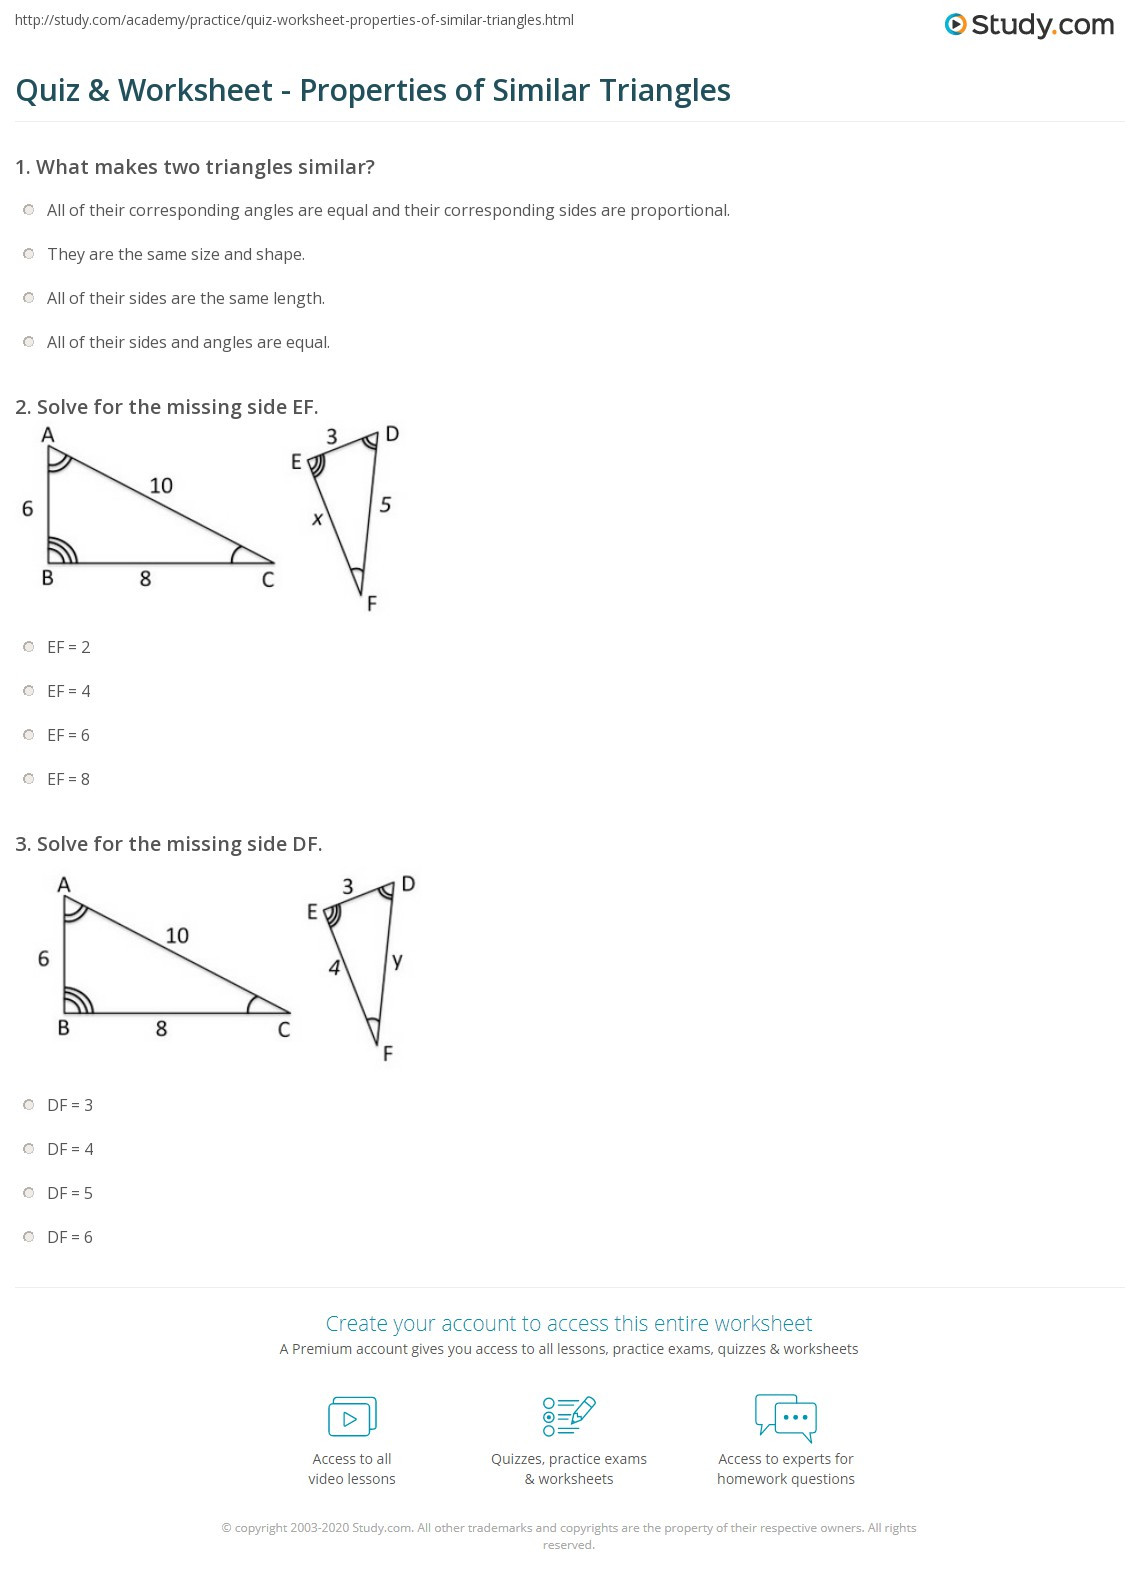 Proving Triangles Similar Worksheet Quiz &amp; Worksheet Properties Of Similar Triangles